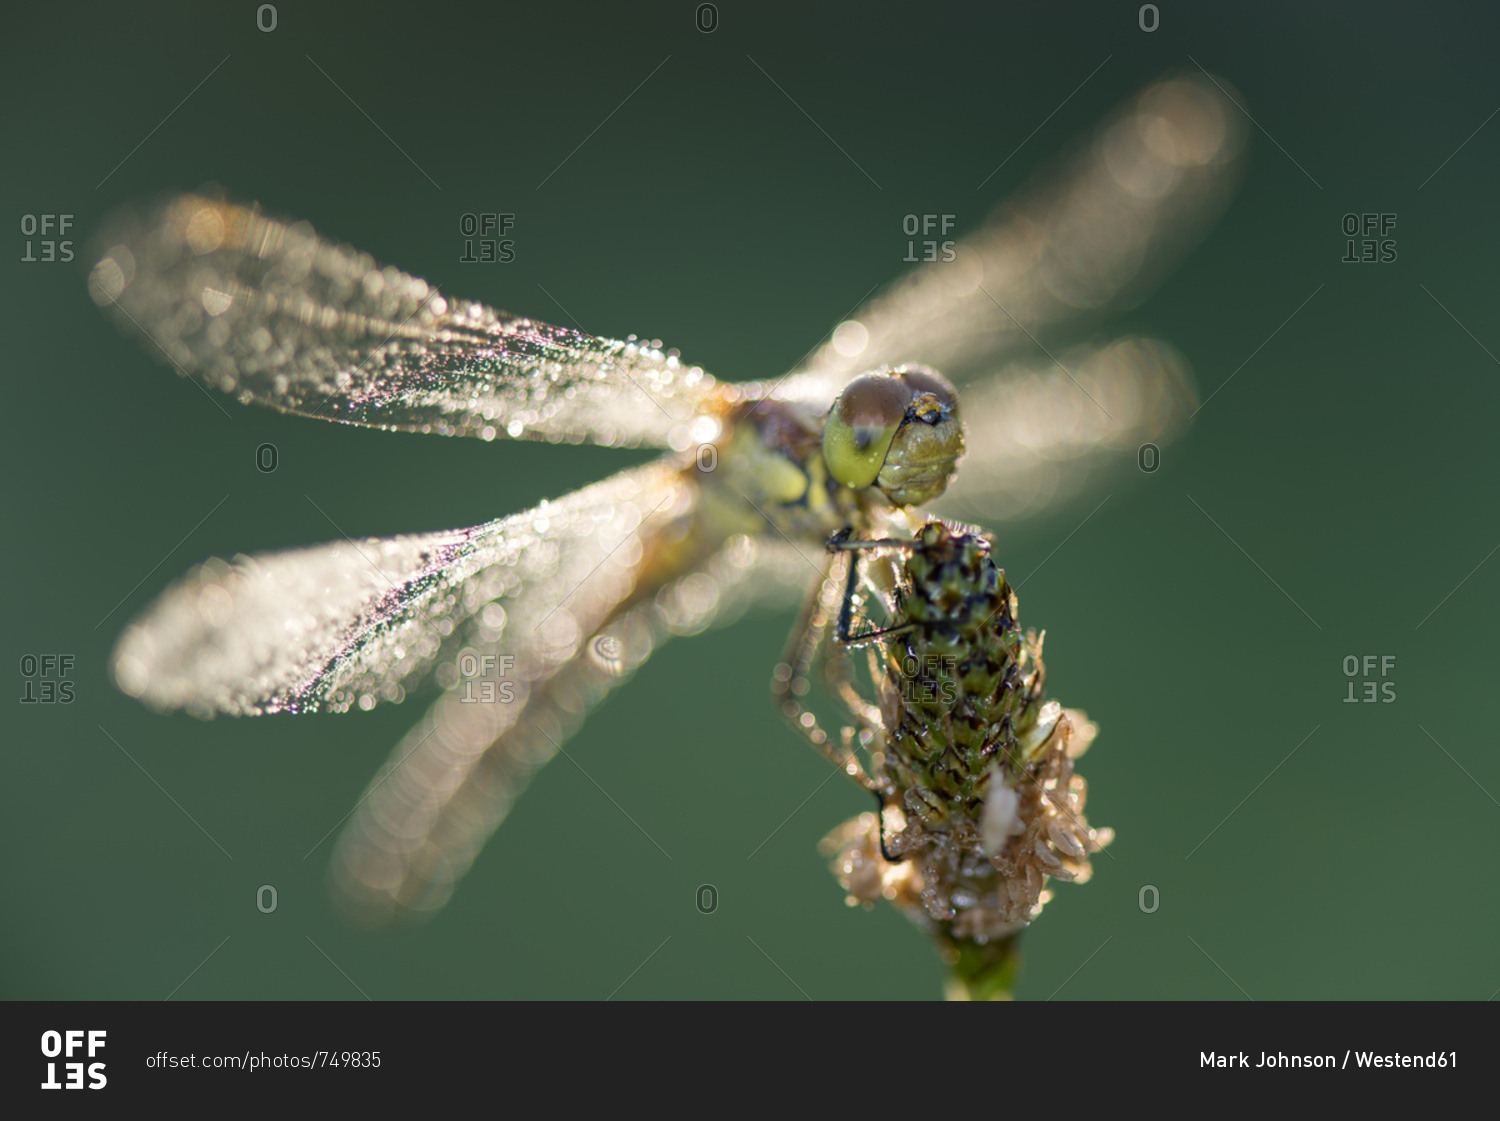 Common darter firefly, Sympetrum striolatum, hovering over flower